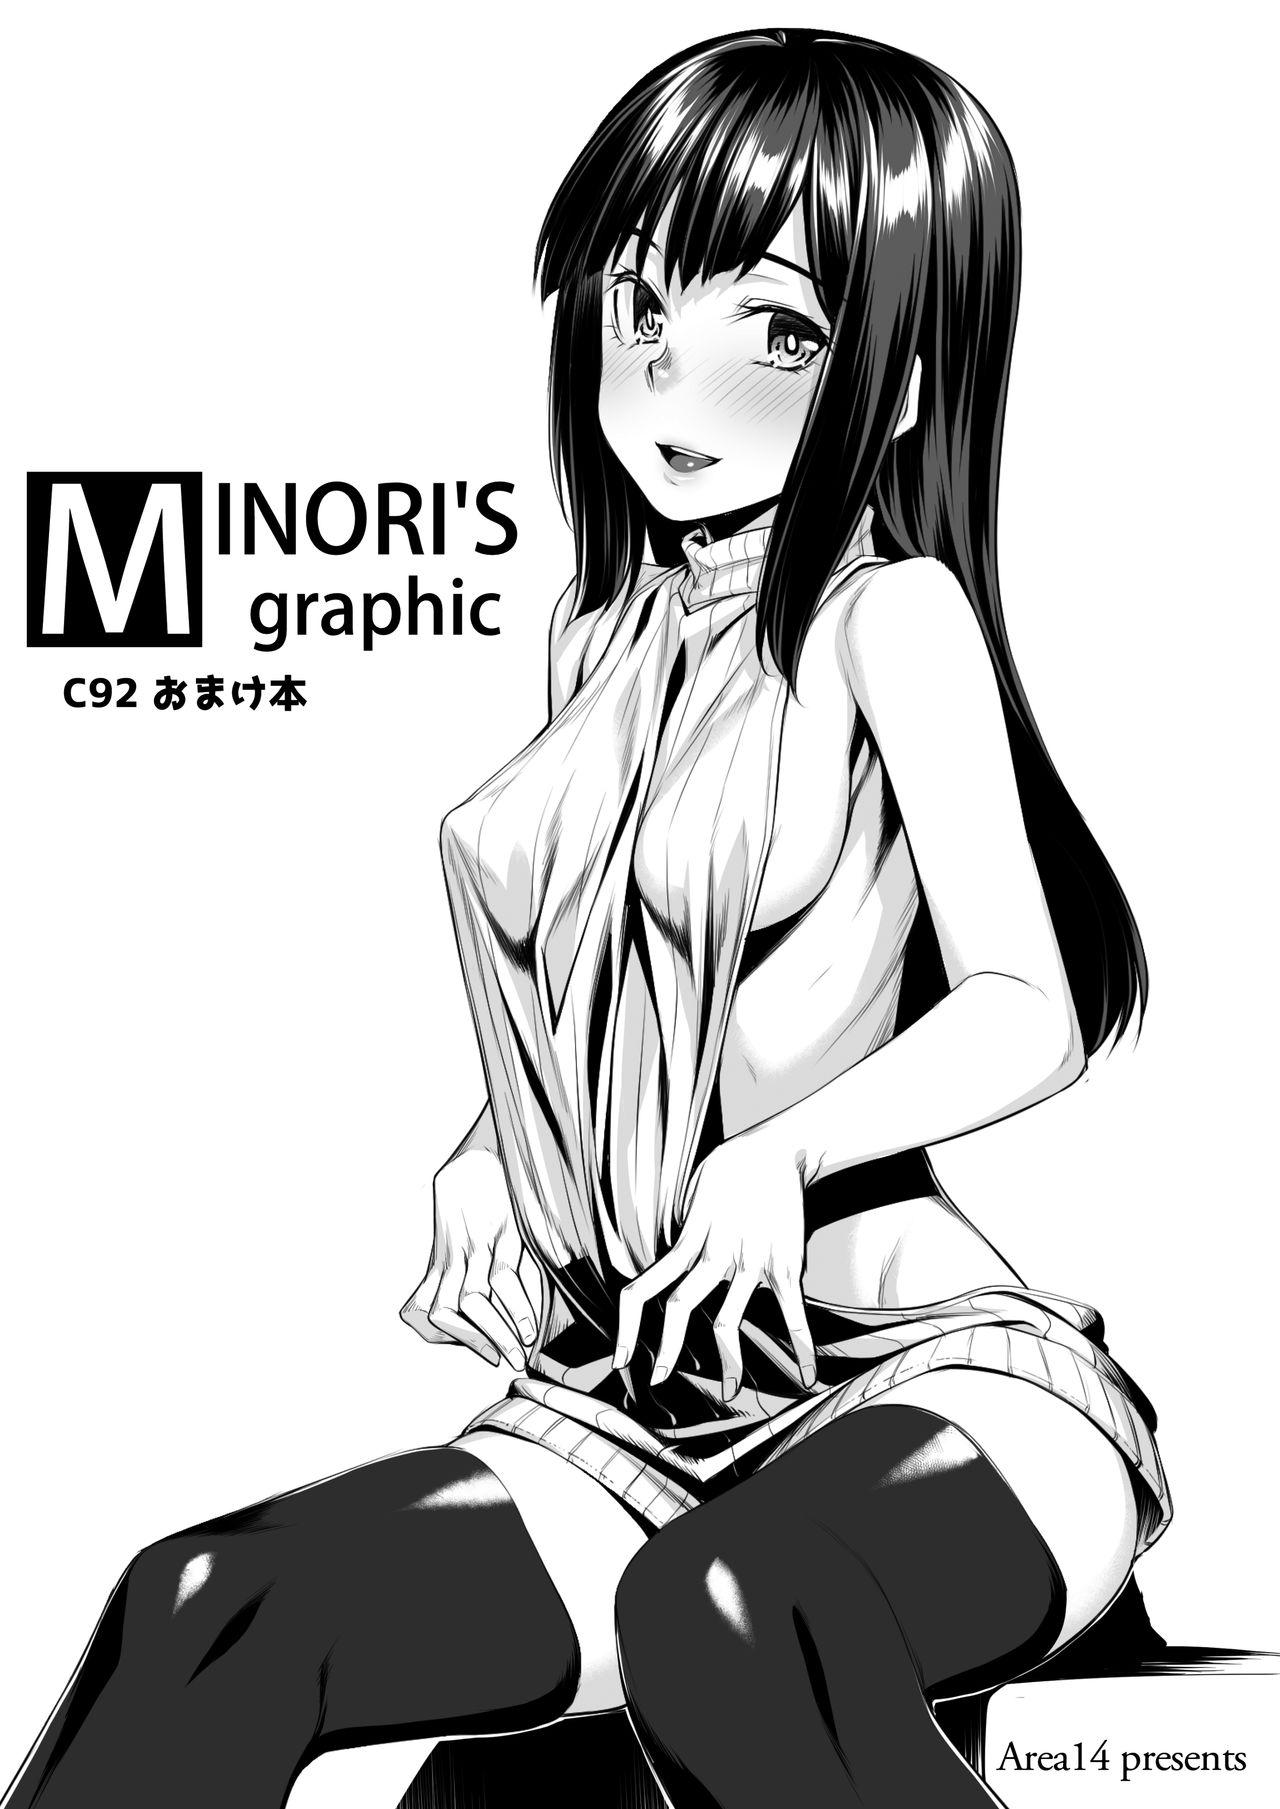 Pussy Licking MINORI'S graphic C92 Omakebon - Original Action - Picture 1